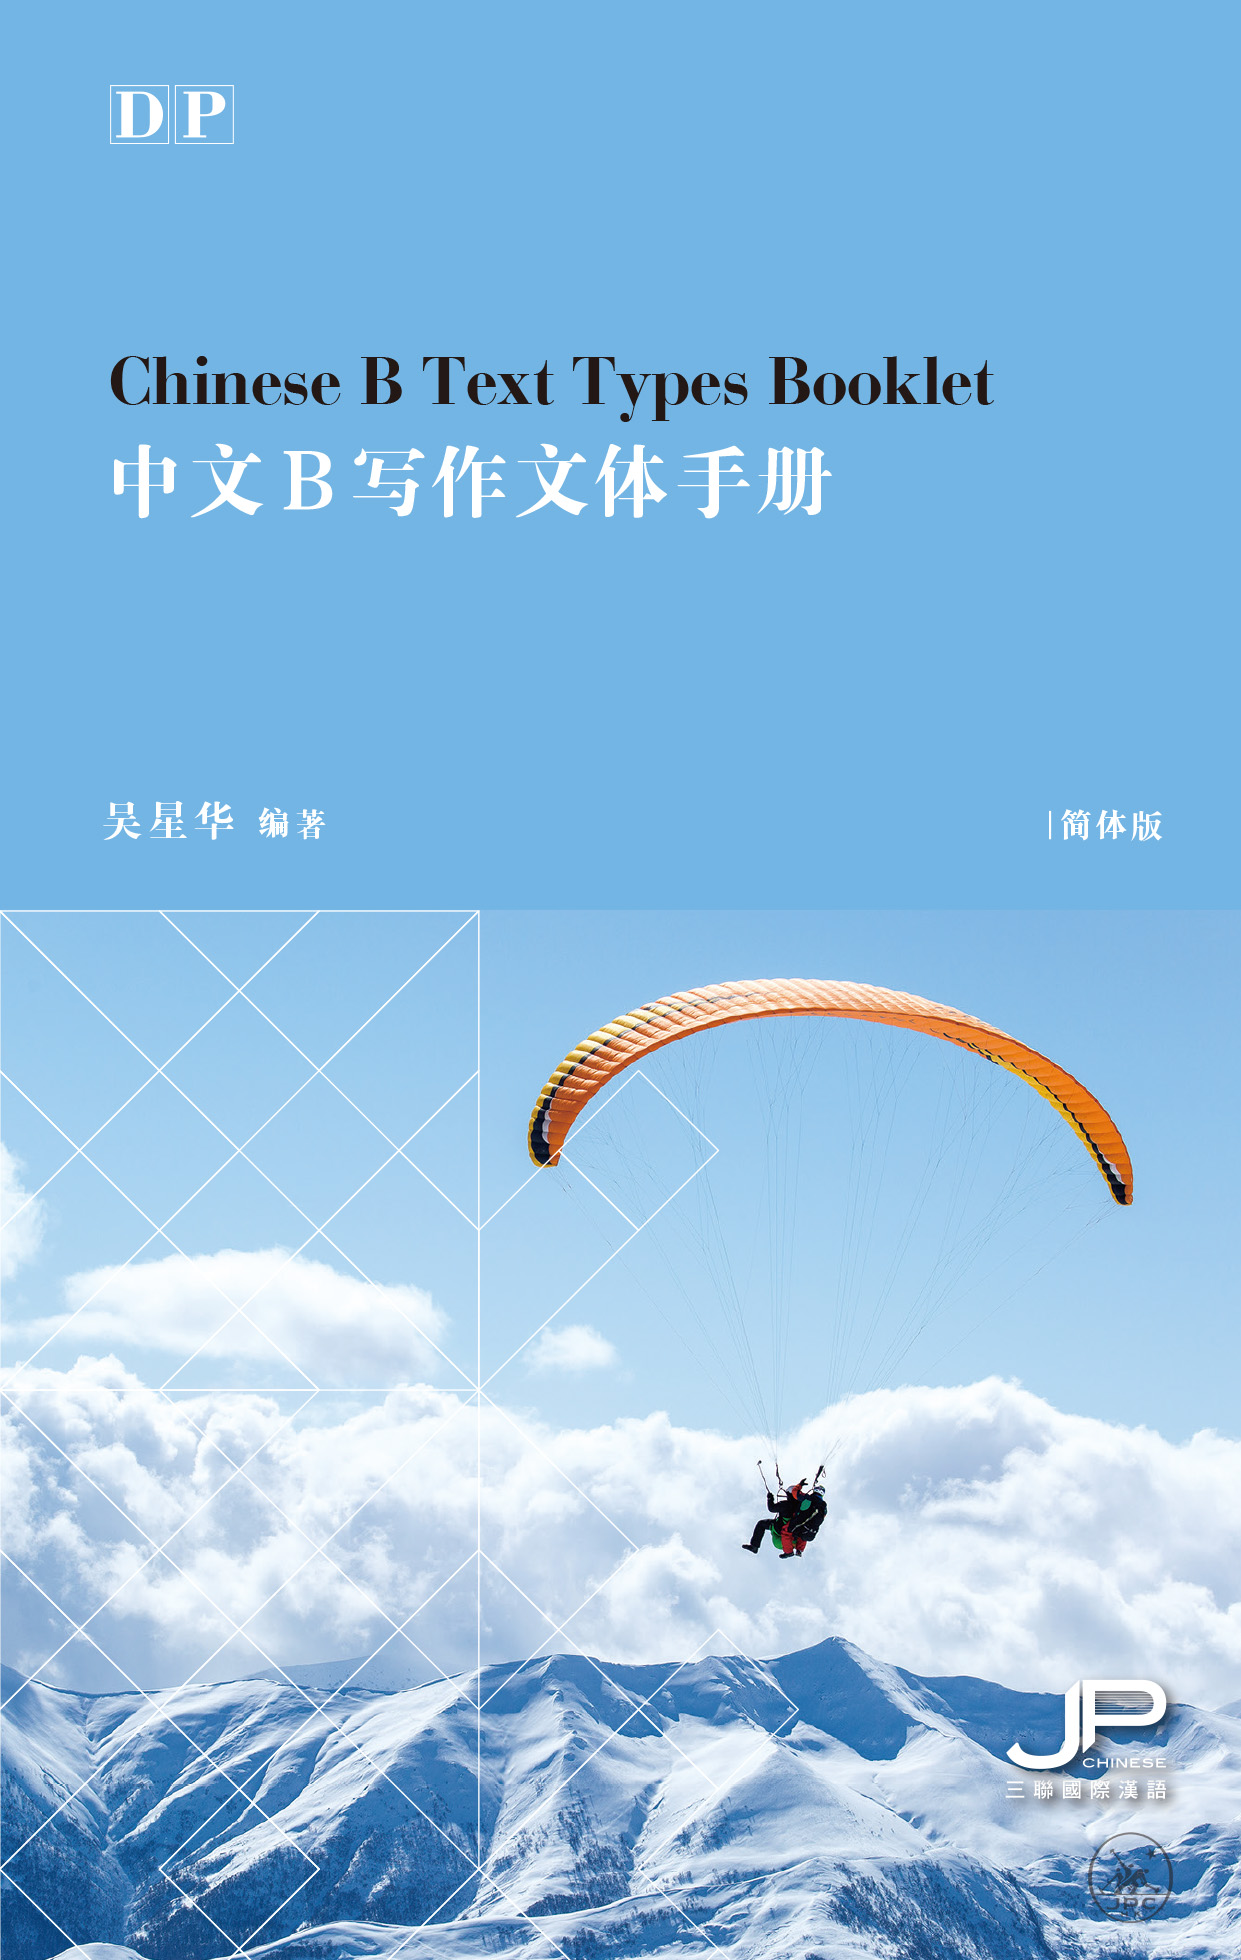 DP中文B写作文体手册 (简体版)  DP Chinese B Text Types Booklet